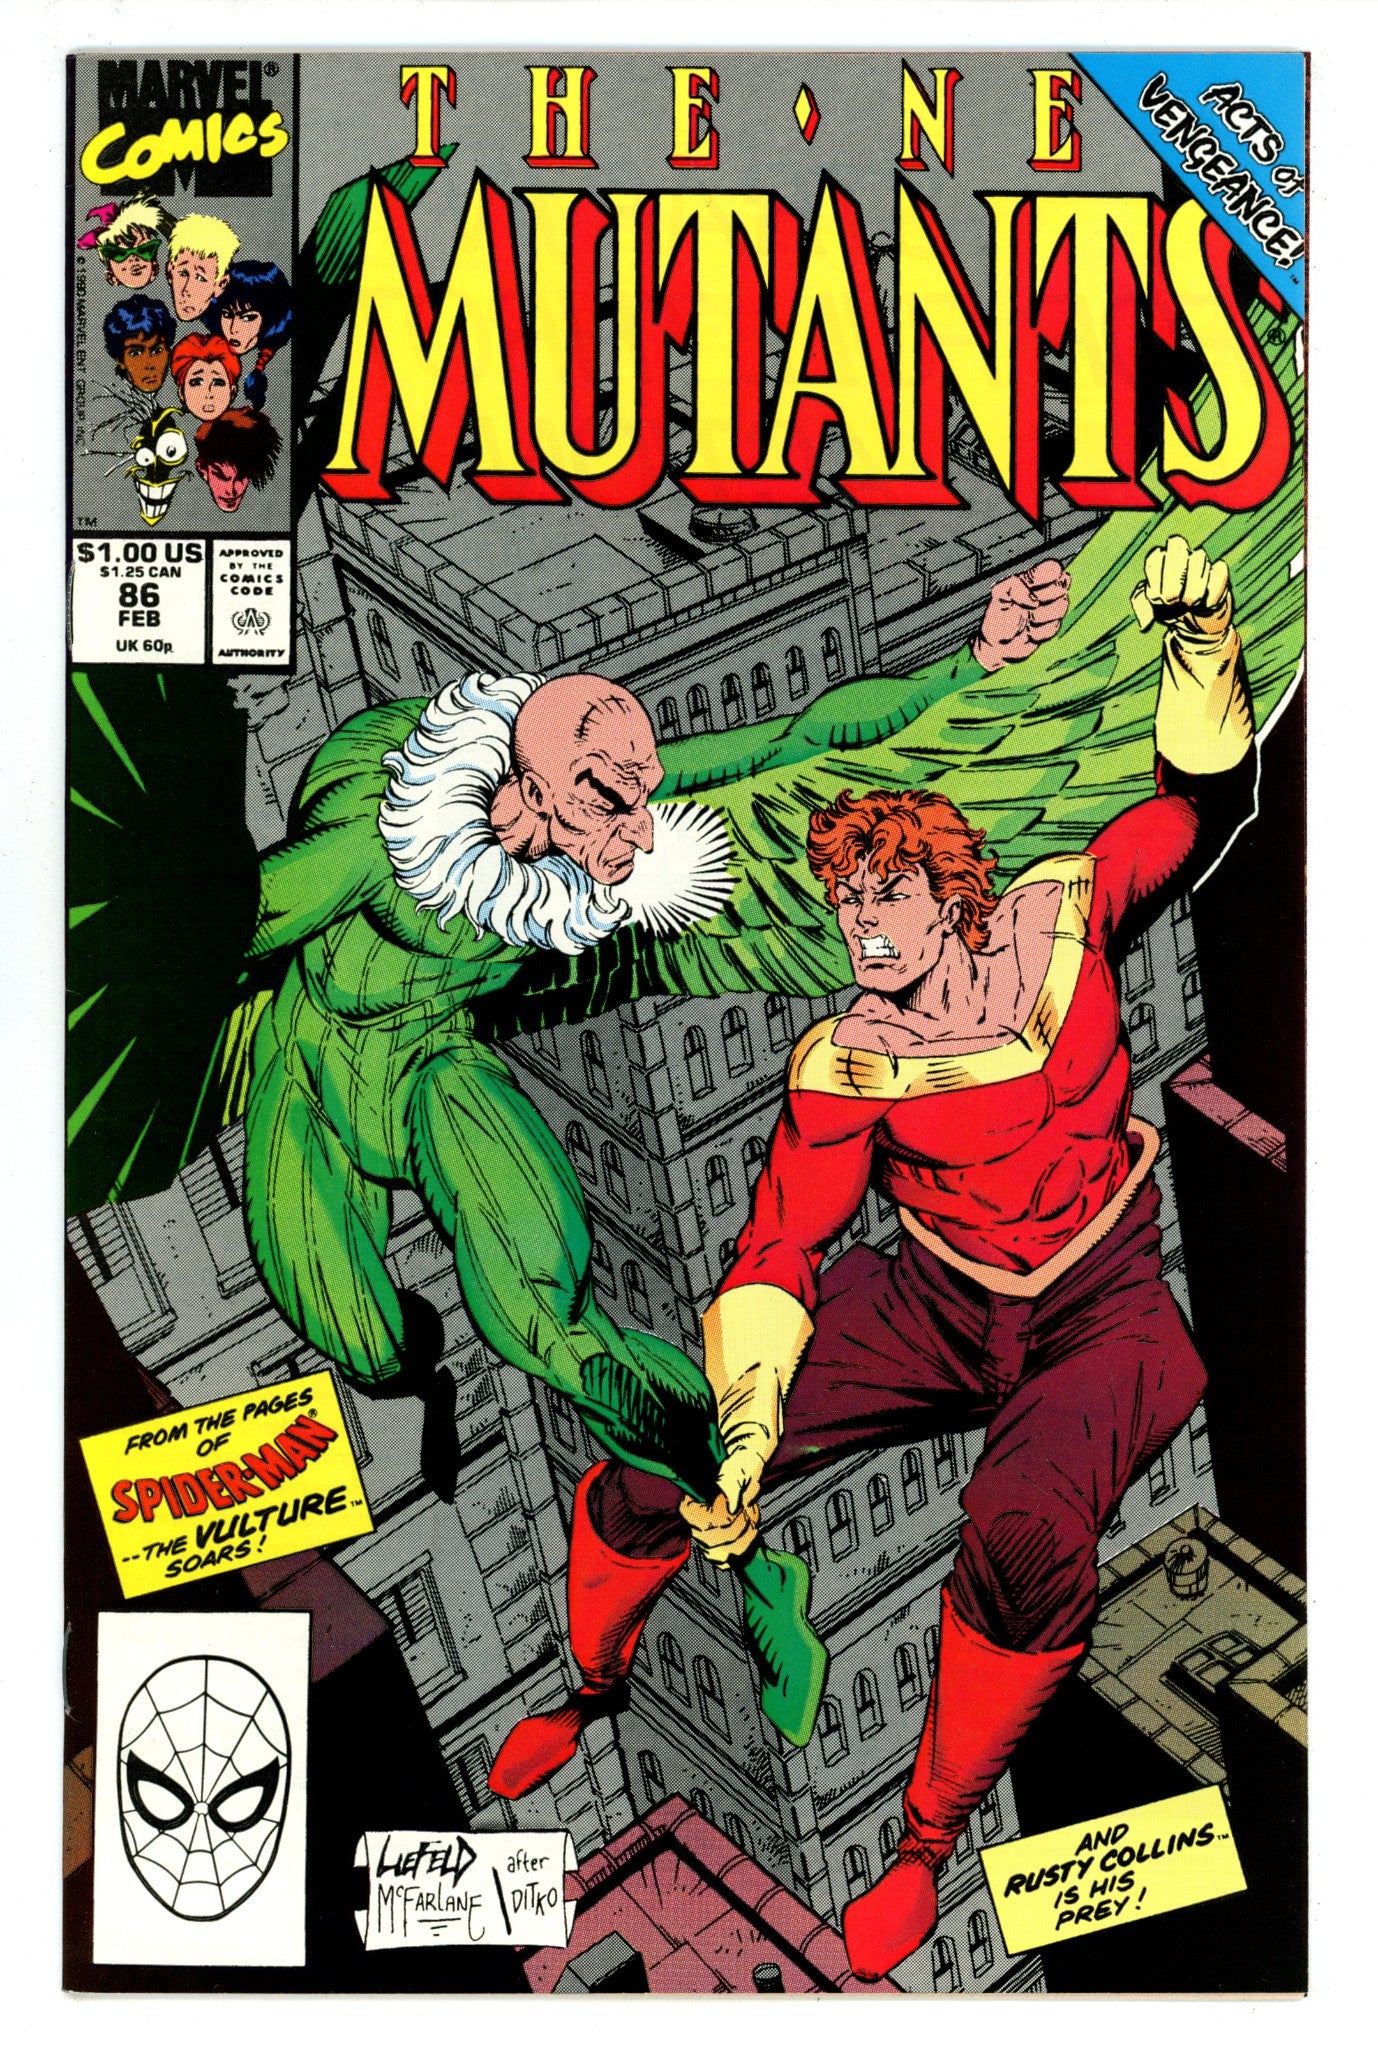 The New Mutants Vol 1 86 VF+ (8.5) (1990) 